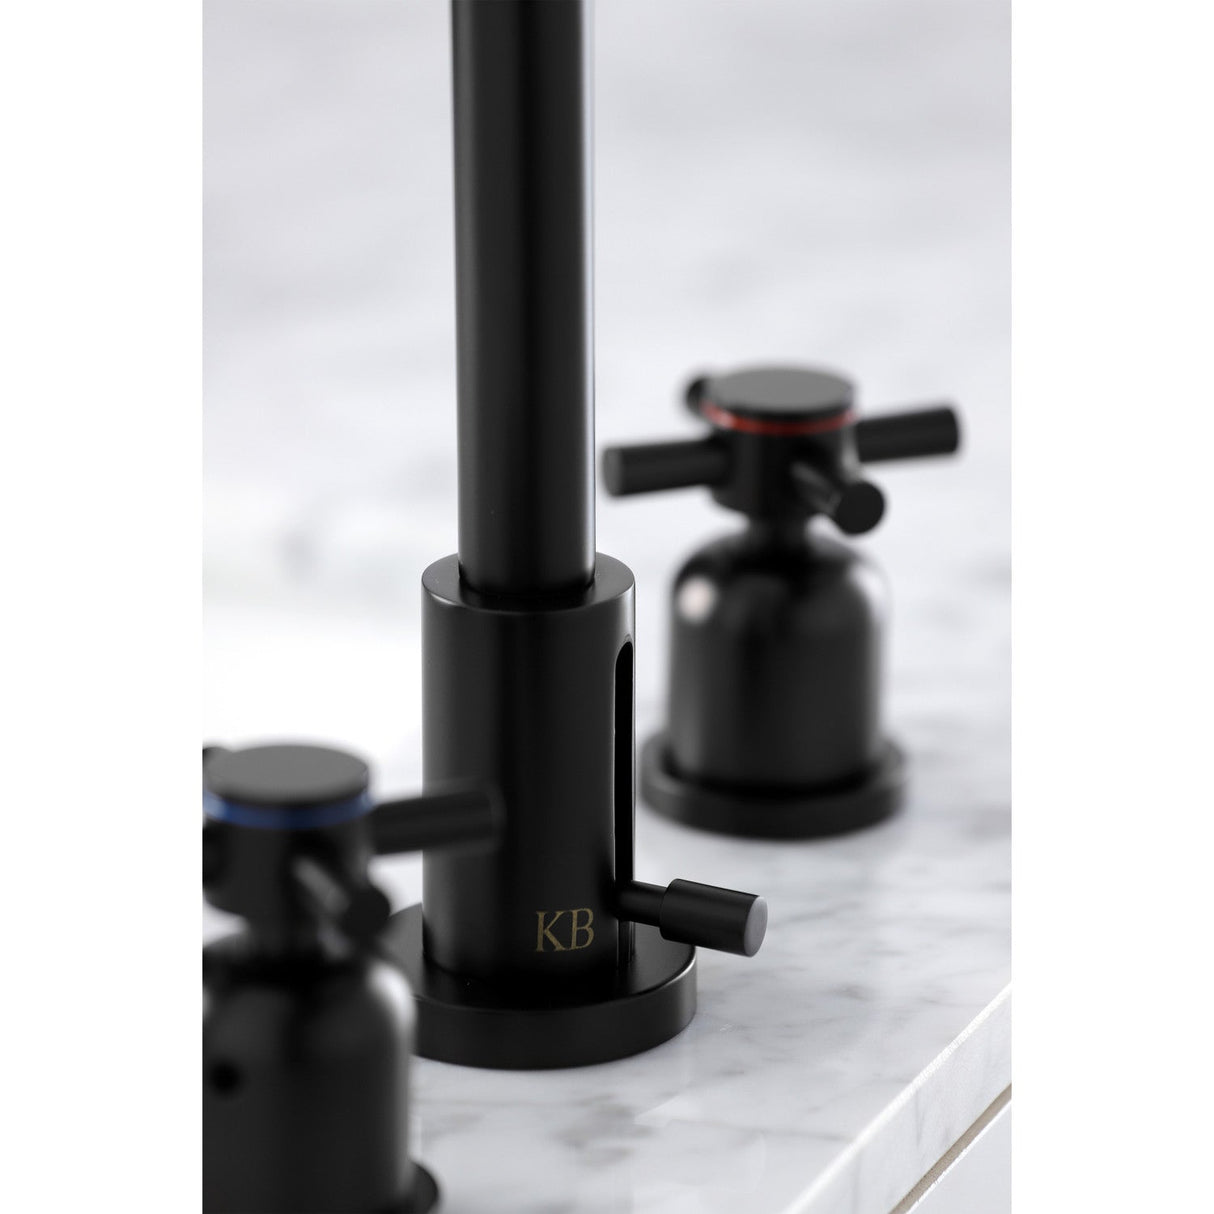 Concord FSC8930DX Two-Handle 3-Hole Deck Mount Widespread Bathroom Faucet with Pop-Up Drain, Matte Black